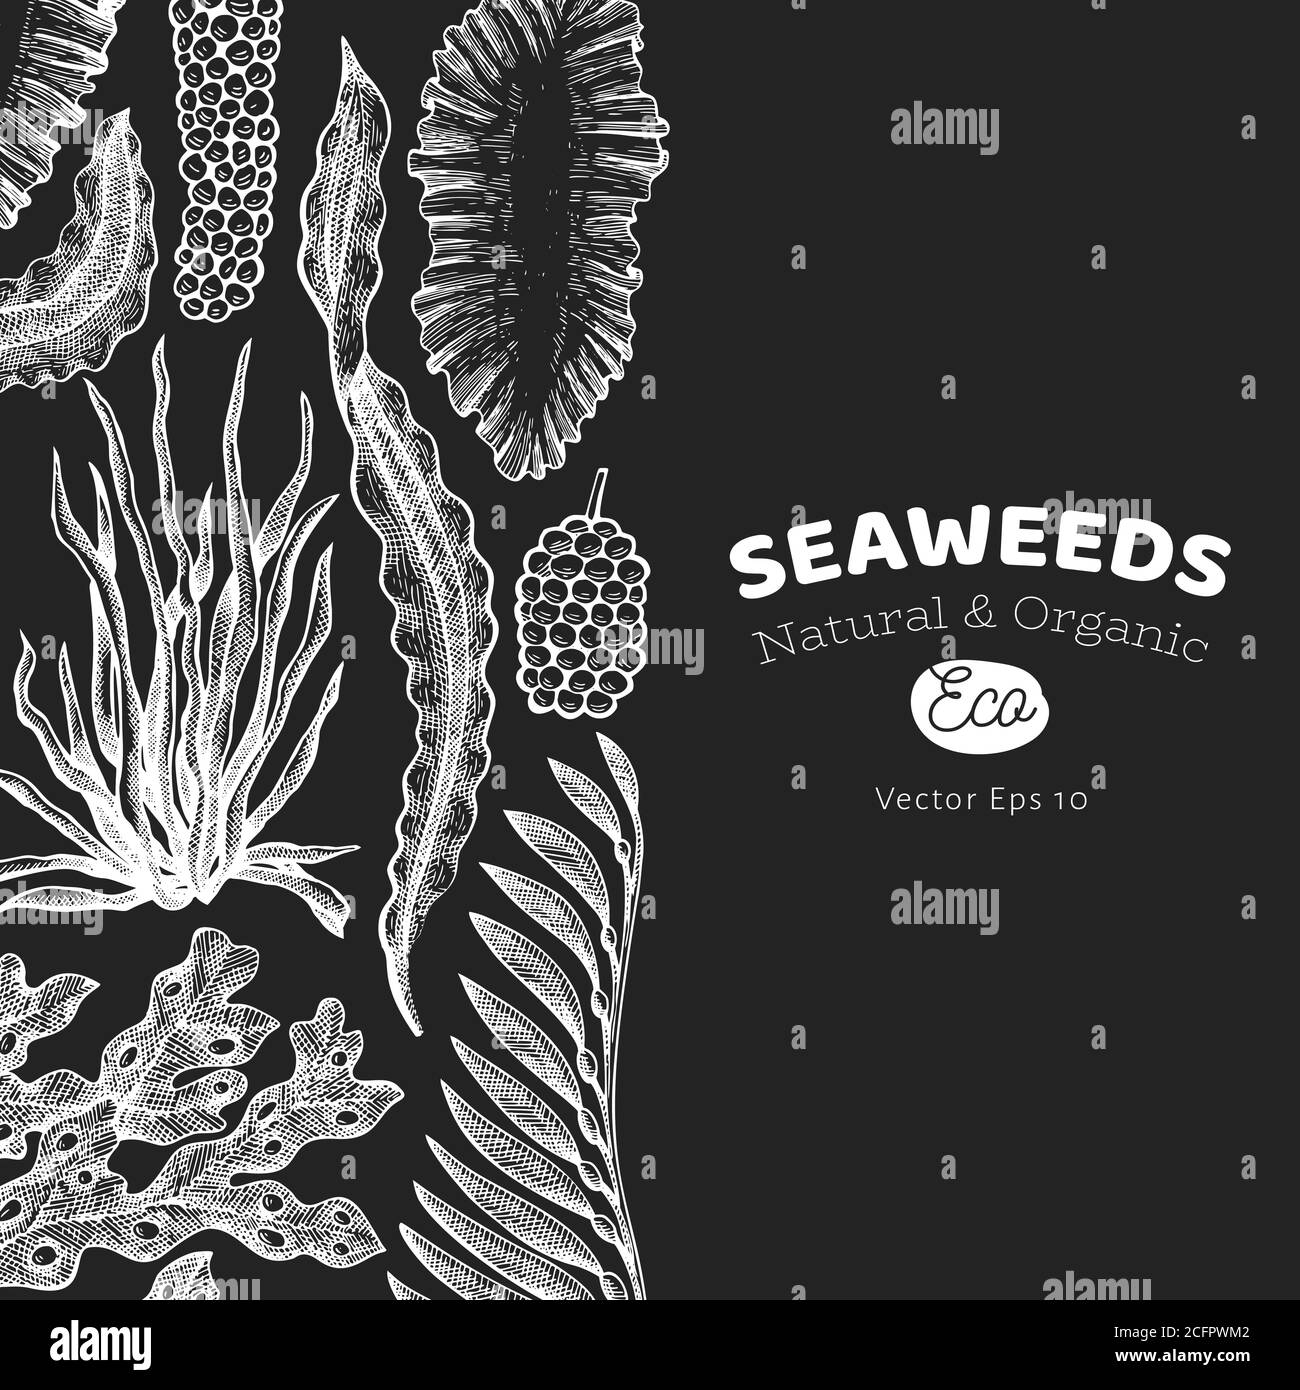 Seaweed design template. Hand drawn vector seaweeds illustration on chalk board. Engraved style sea food banner. Vintage sea plants background Stock Vector